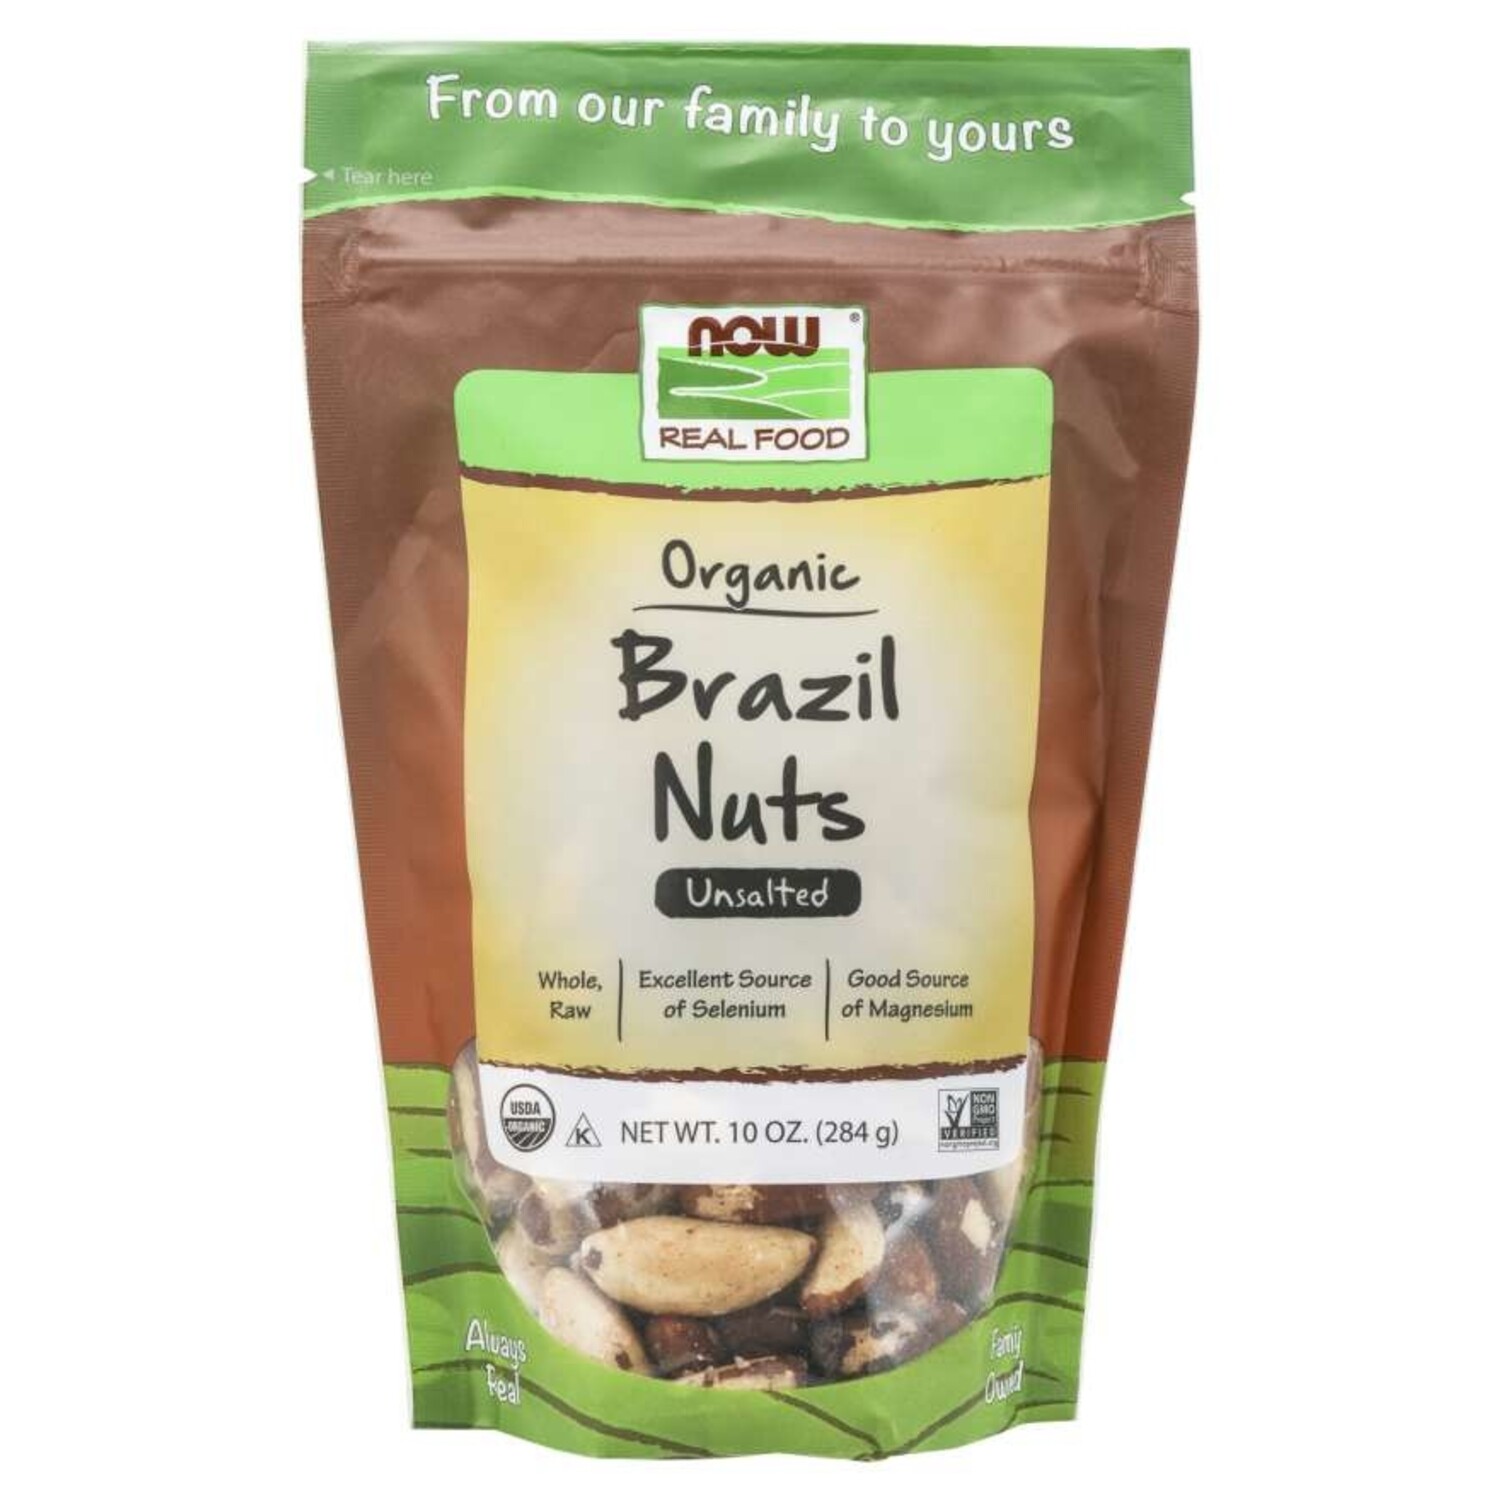 Organic Brazil Nuts - HealthKick Nutrition™ - Official Site - Premium